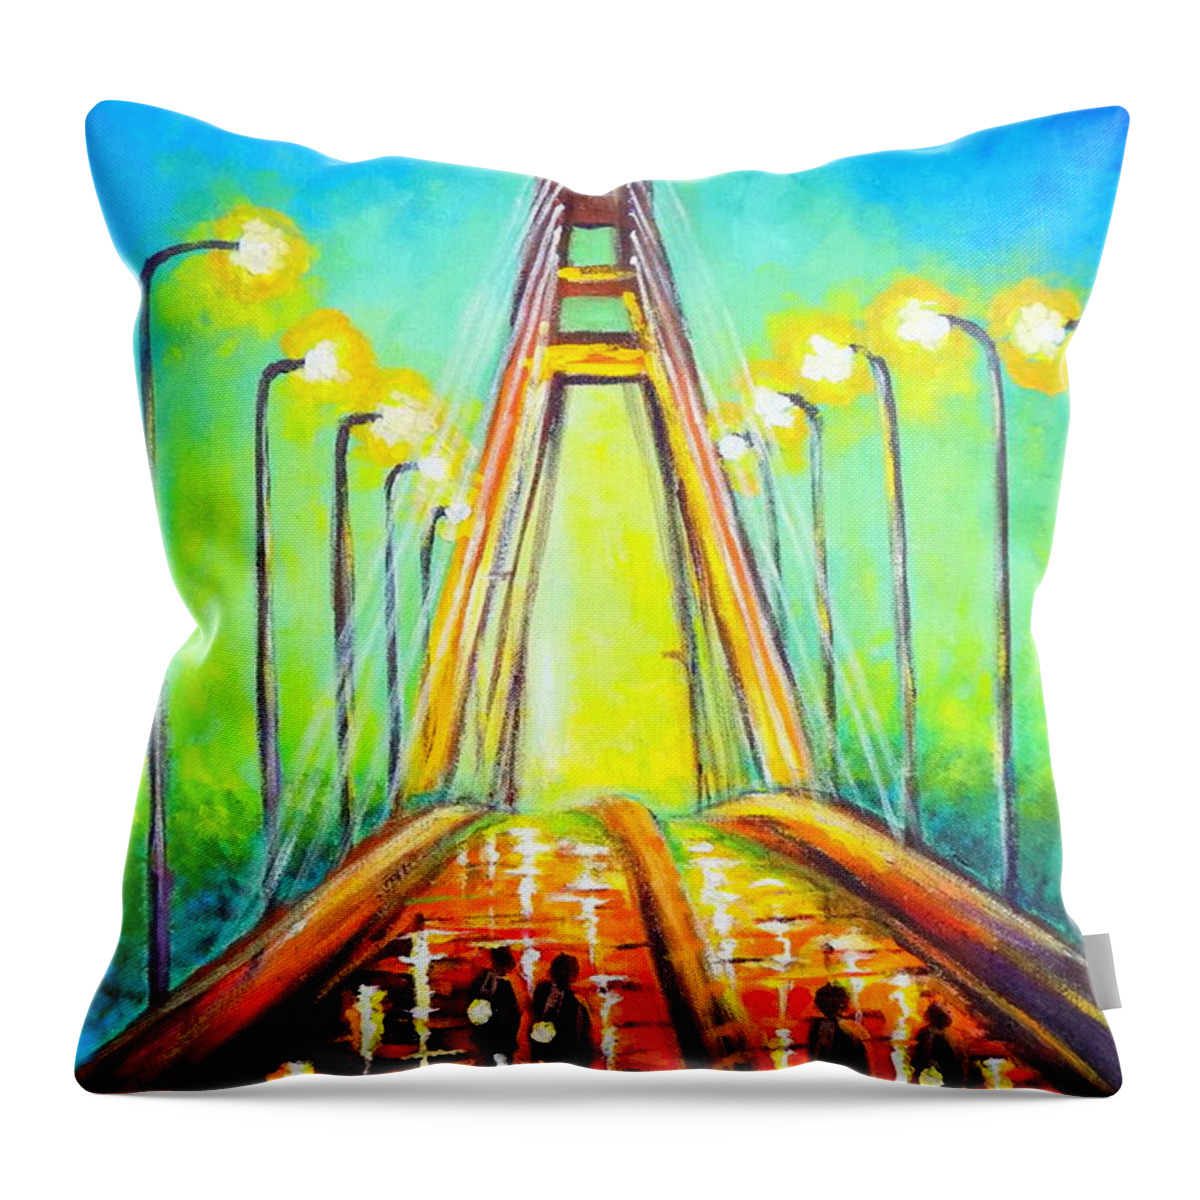 Living Room Throw Pillow featuring the painting Lekki Ikoyi Link Bridge by Olaoluwa Smith